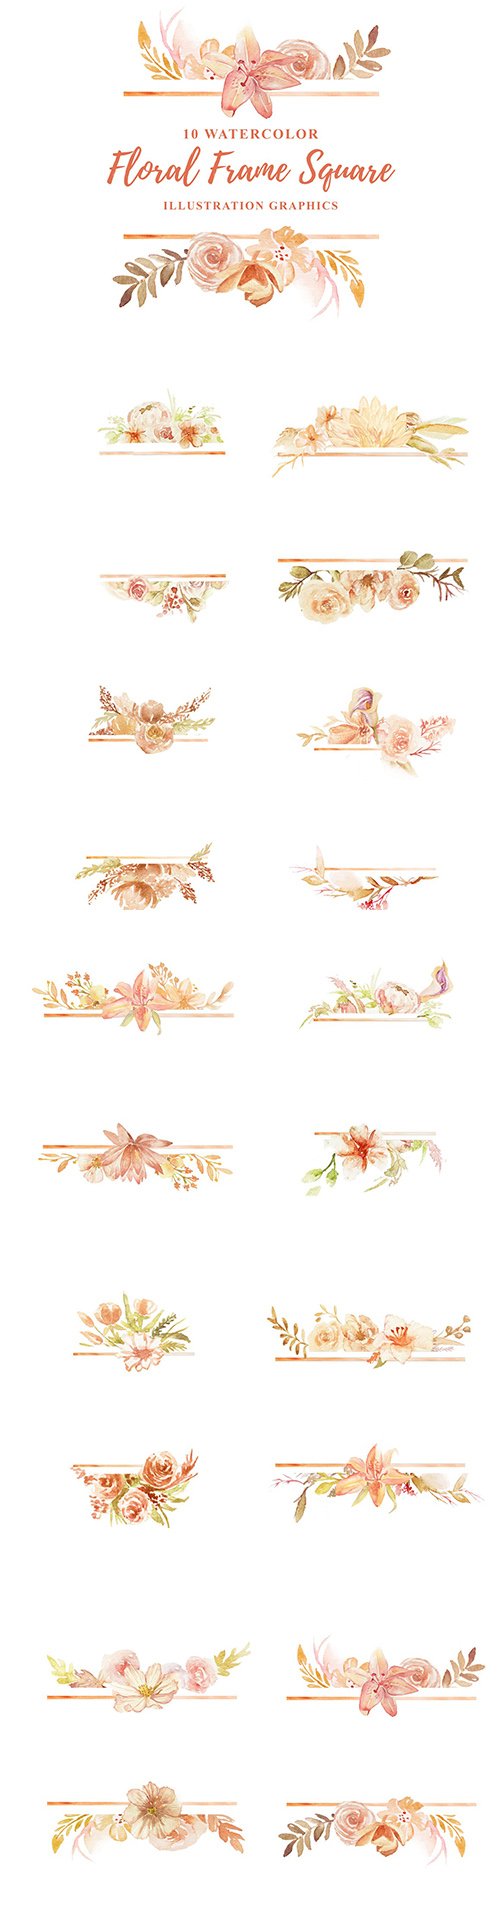 10 Watercolor Floral Frame Square Illustration